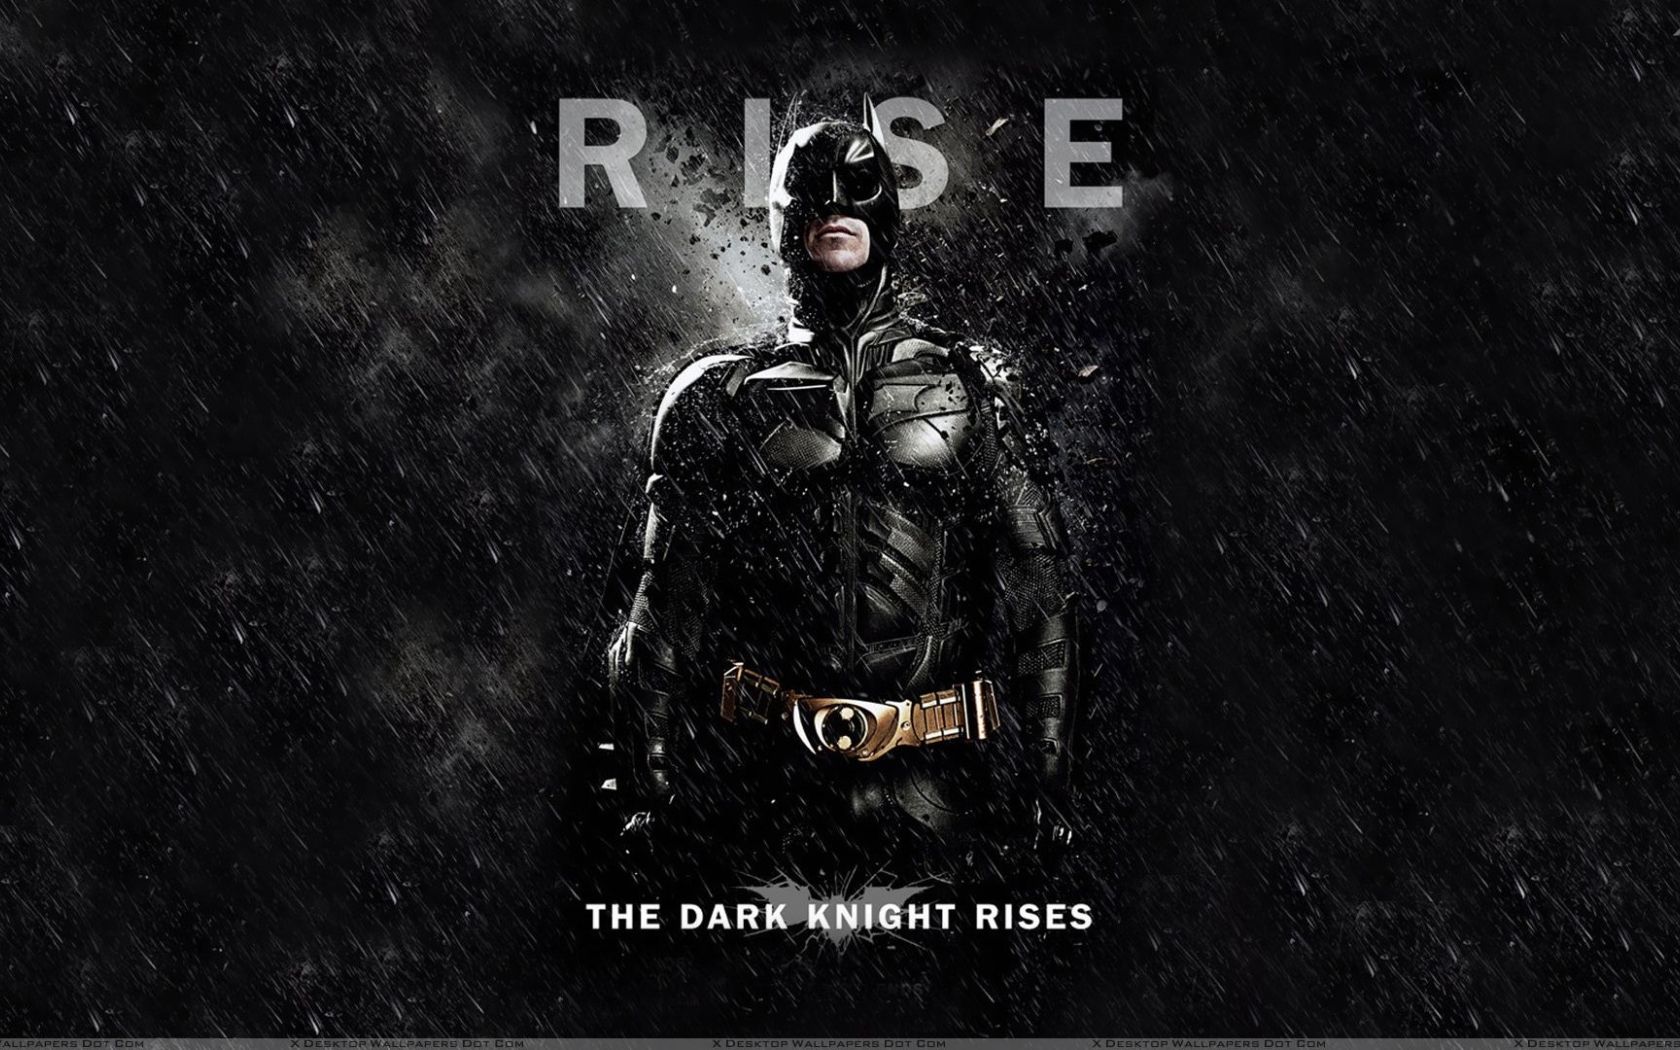 Free download The Dark Knight Rises Christian Bale As Batman